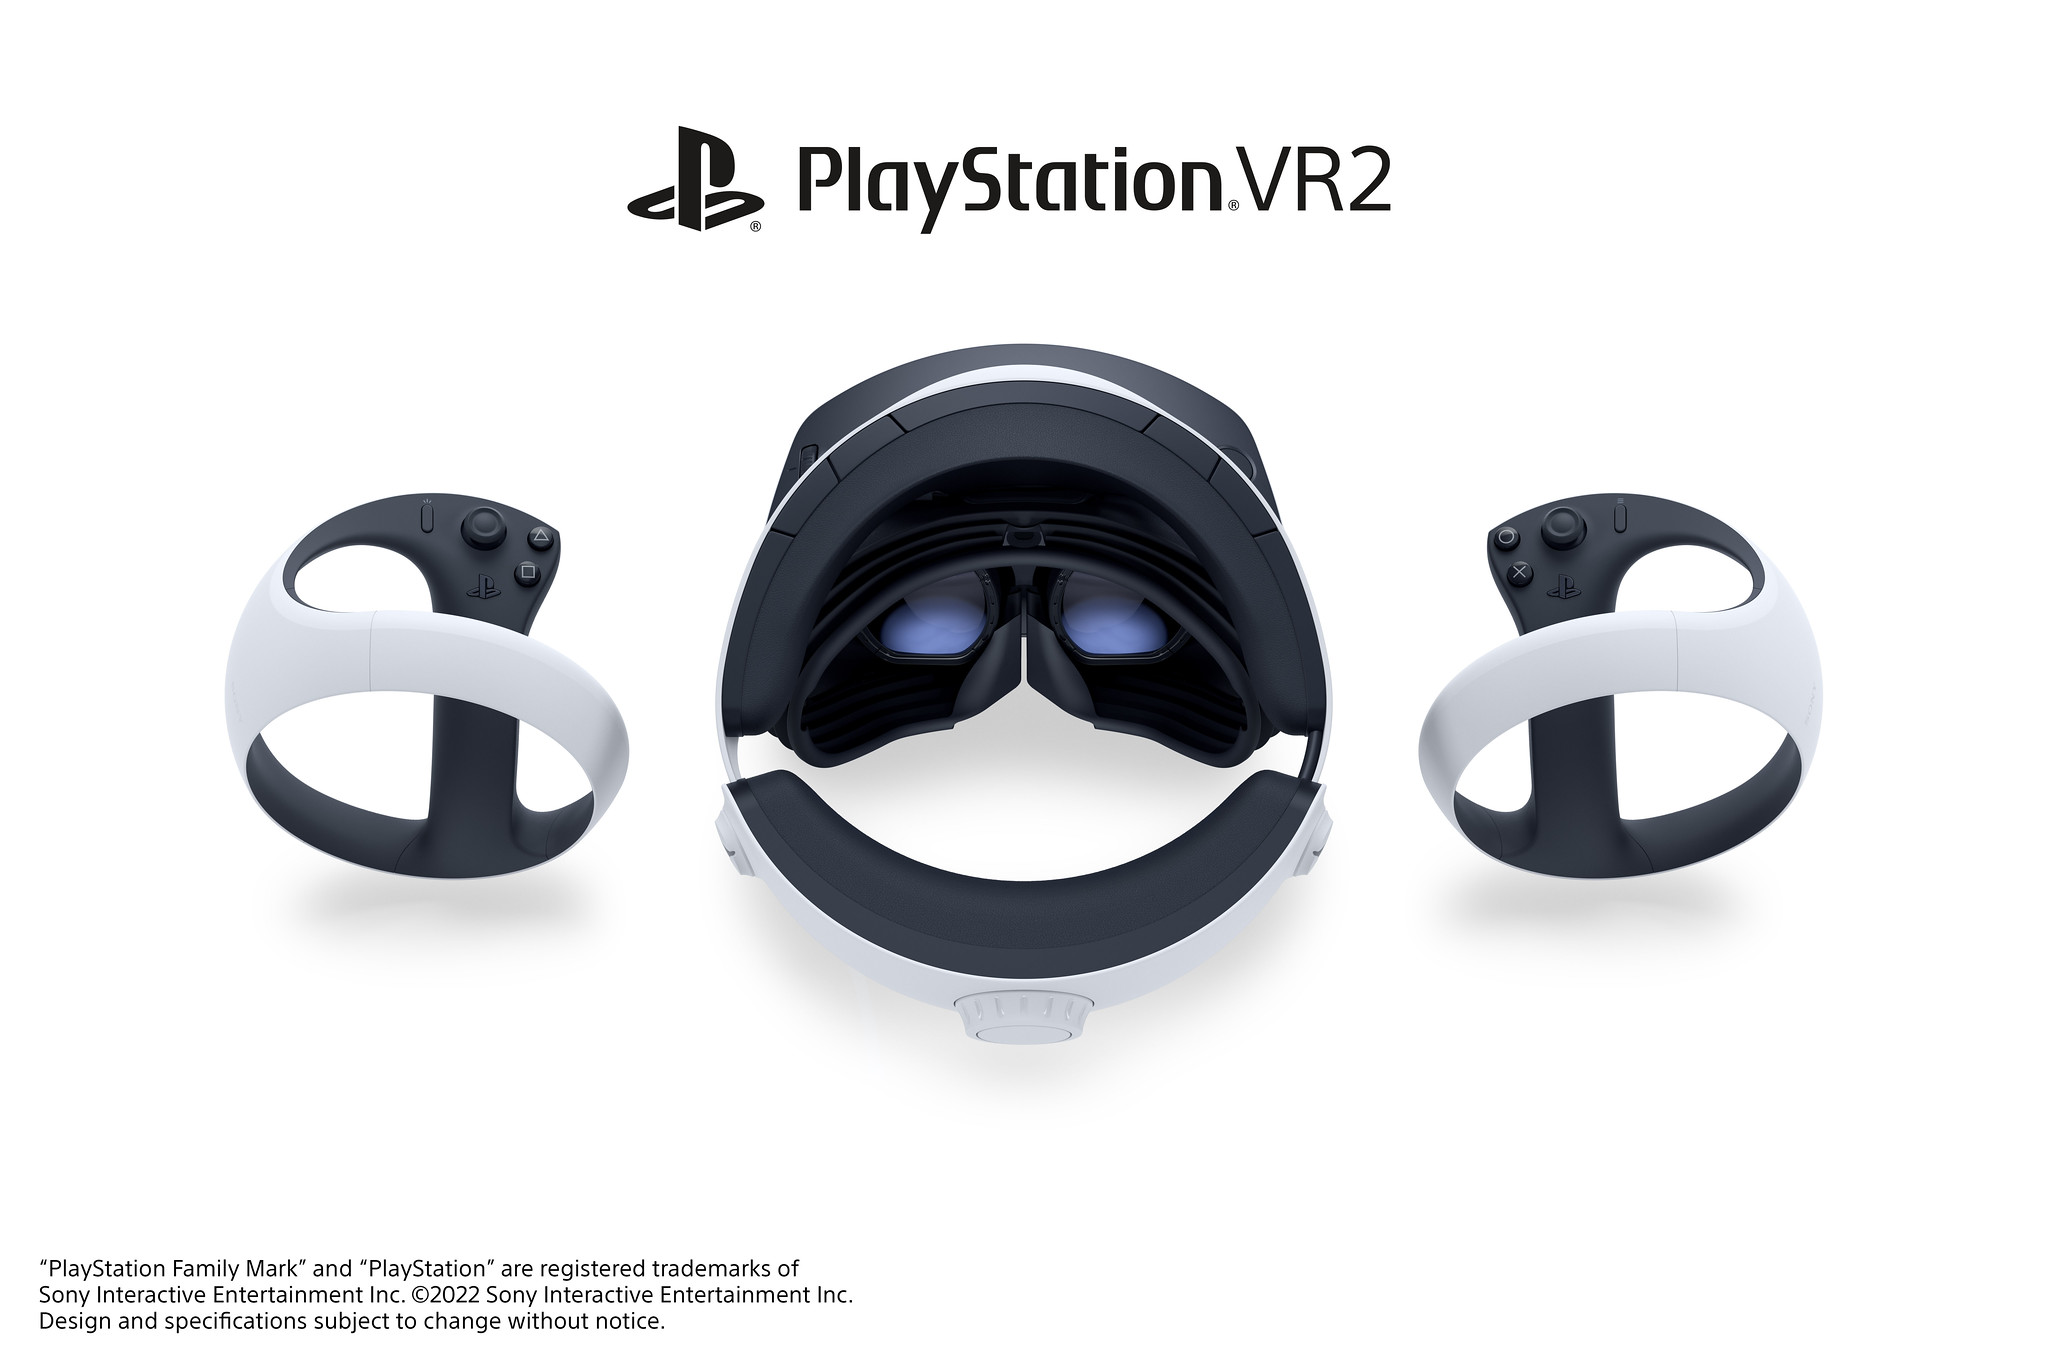 PSVR2, PlayStation VR 2, PlayStation 5, PS5 Trailer - Concept, vr ps5 